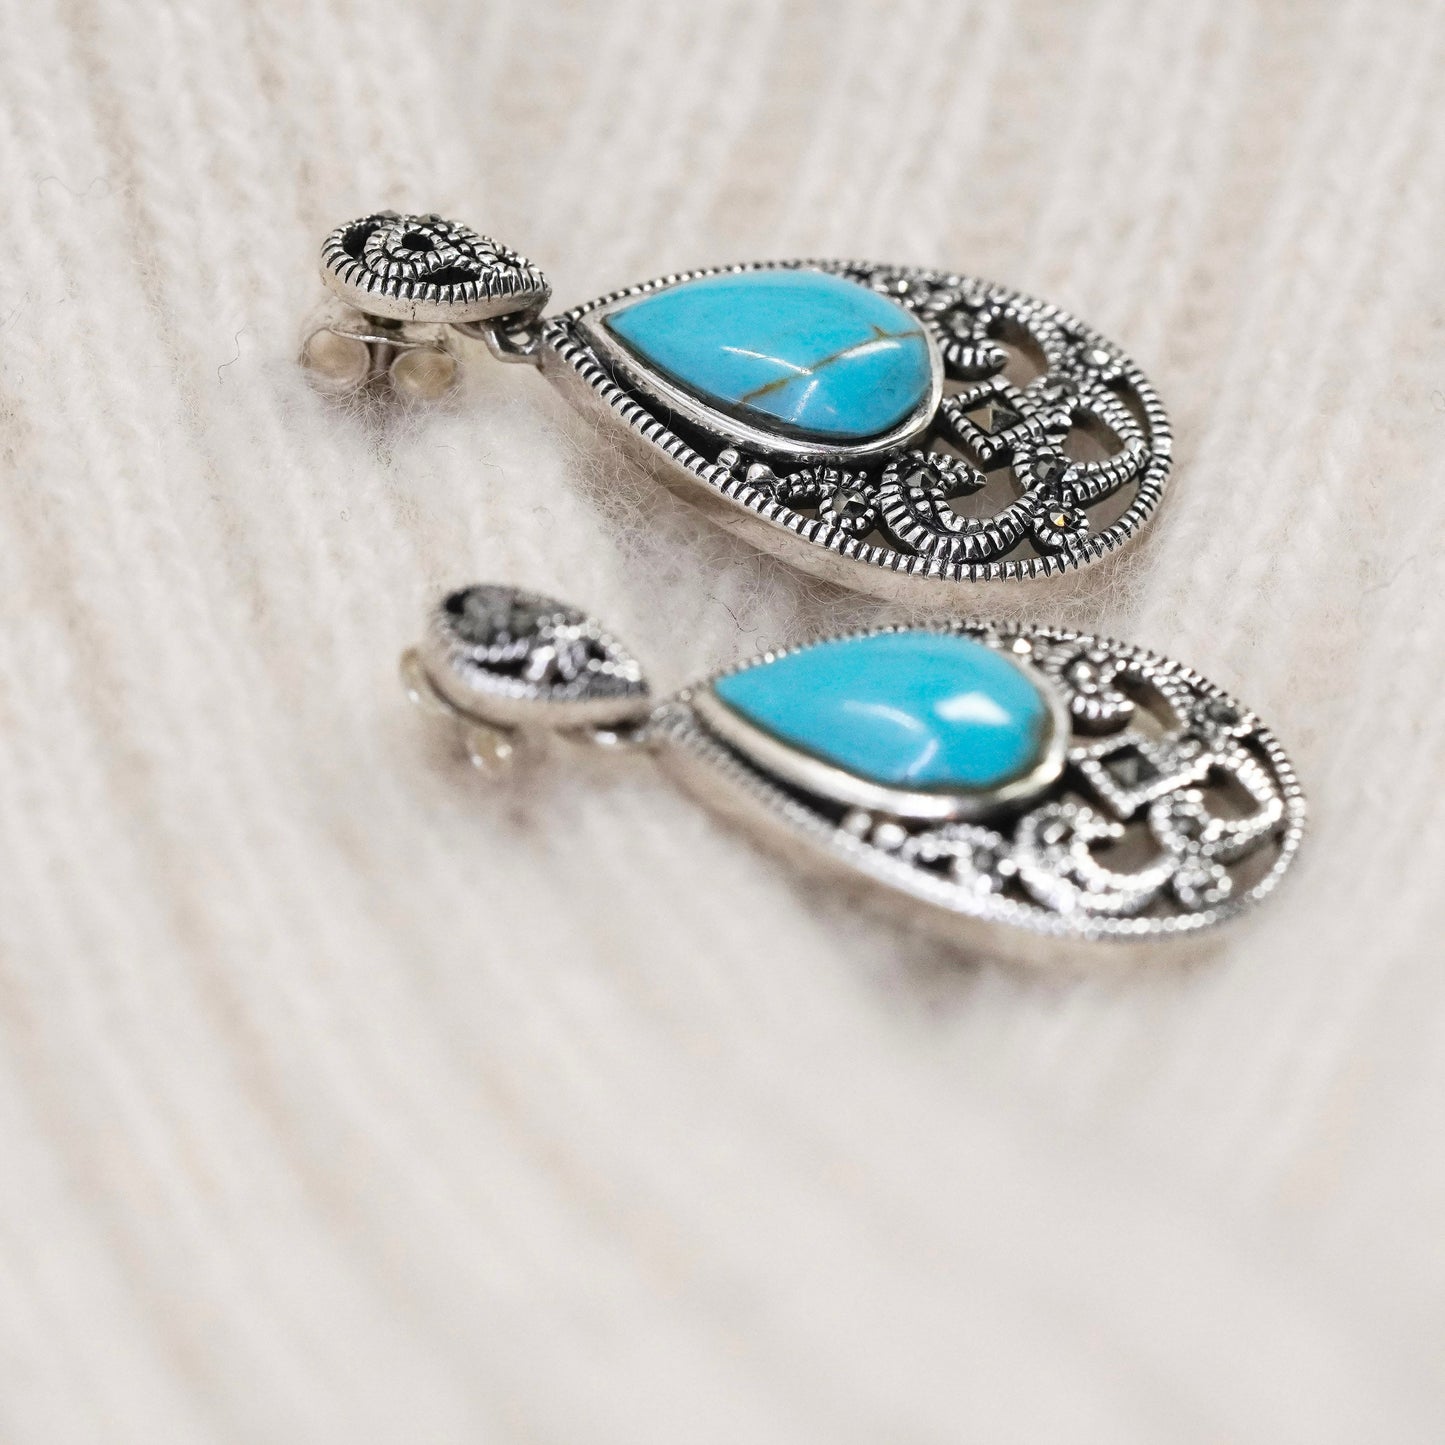 Vintage Sterling 925 silver handmade earrings with teardrop turquoise marcasite